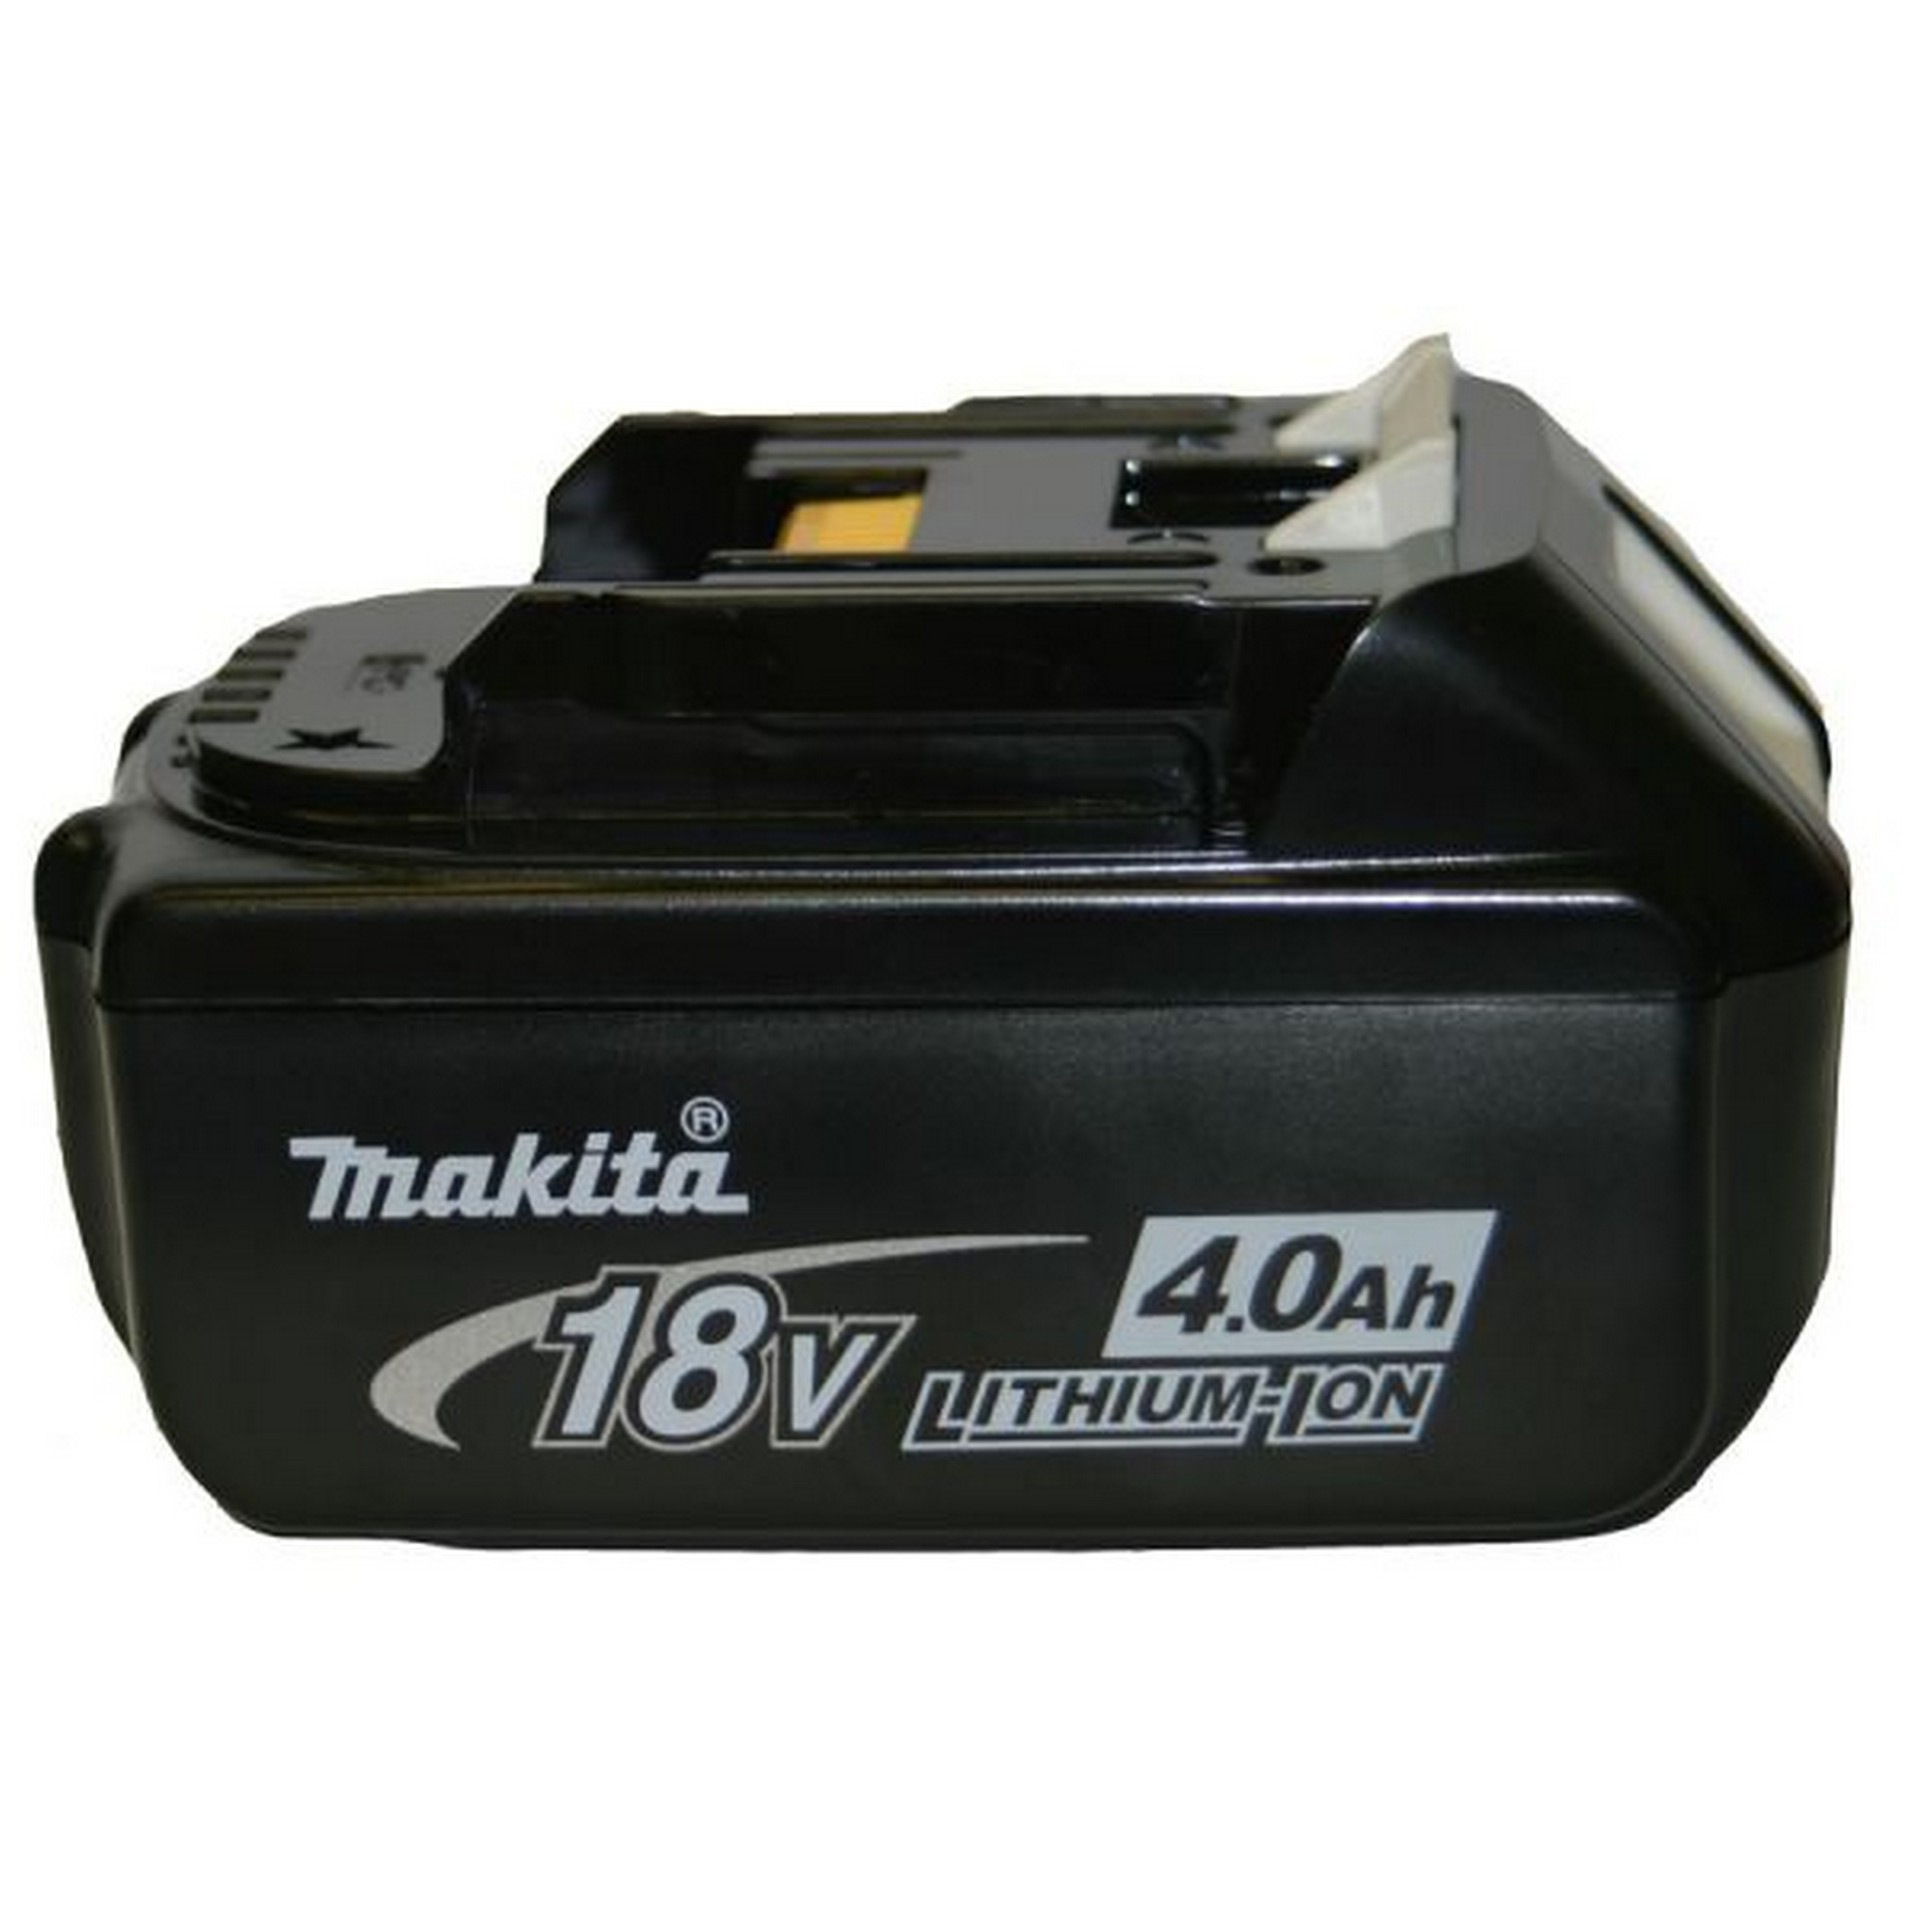 Аккумулятор макита 18 вольт цена. Батарея аккумуляторная Makita bl1840. АКБ Макита 18в. Li-ion 4 а*ч 18v Makita. Аккумулятор Макита 18 вольт 1,5 а.